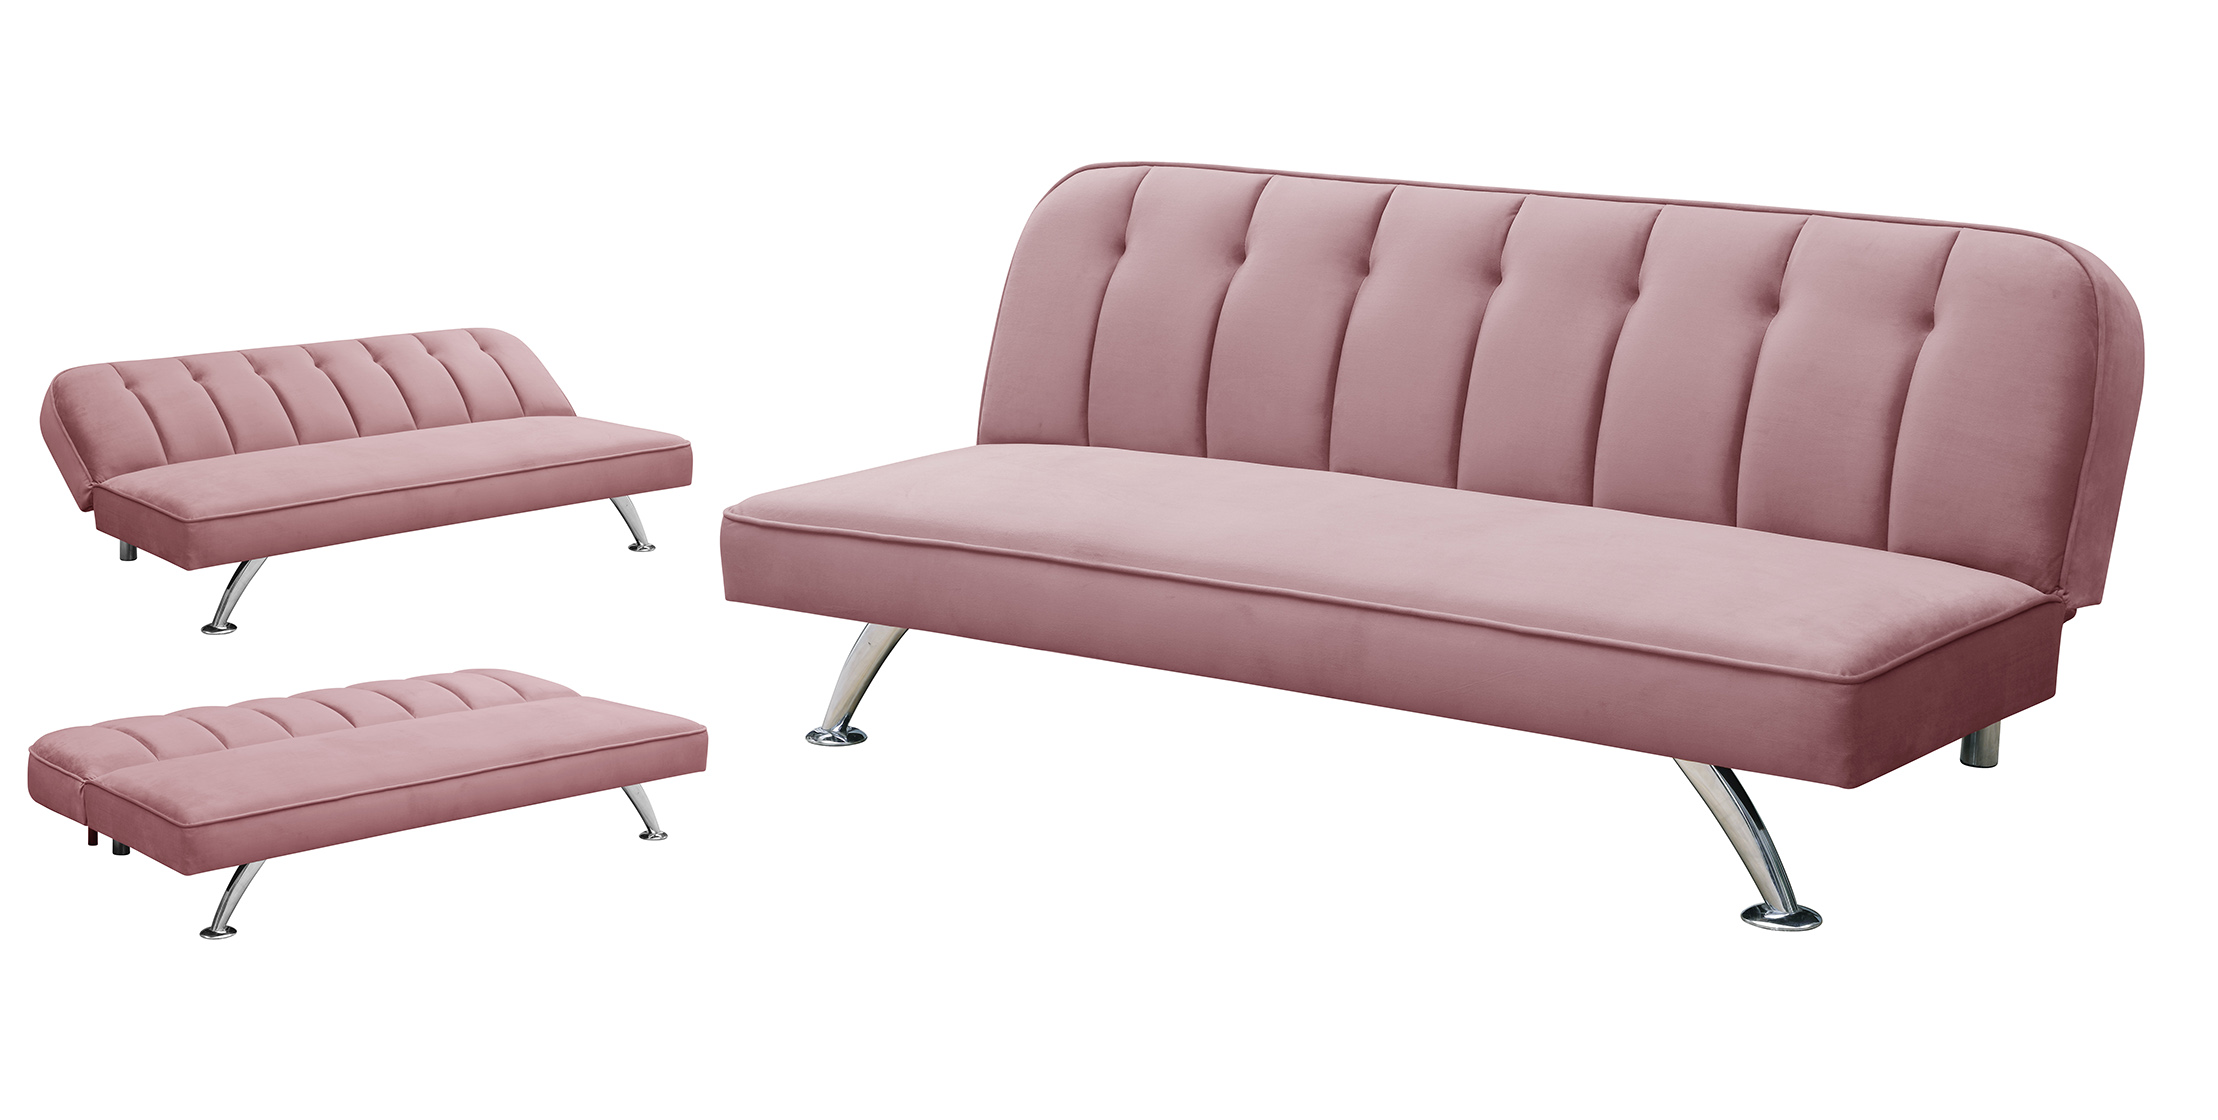 deep pink sofa bed